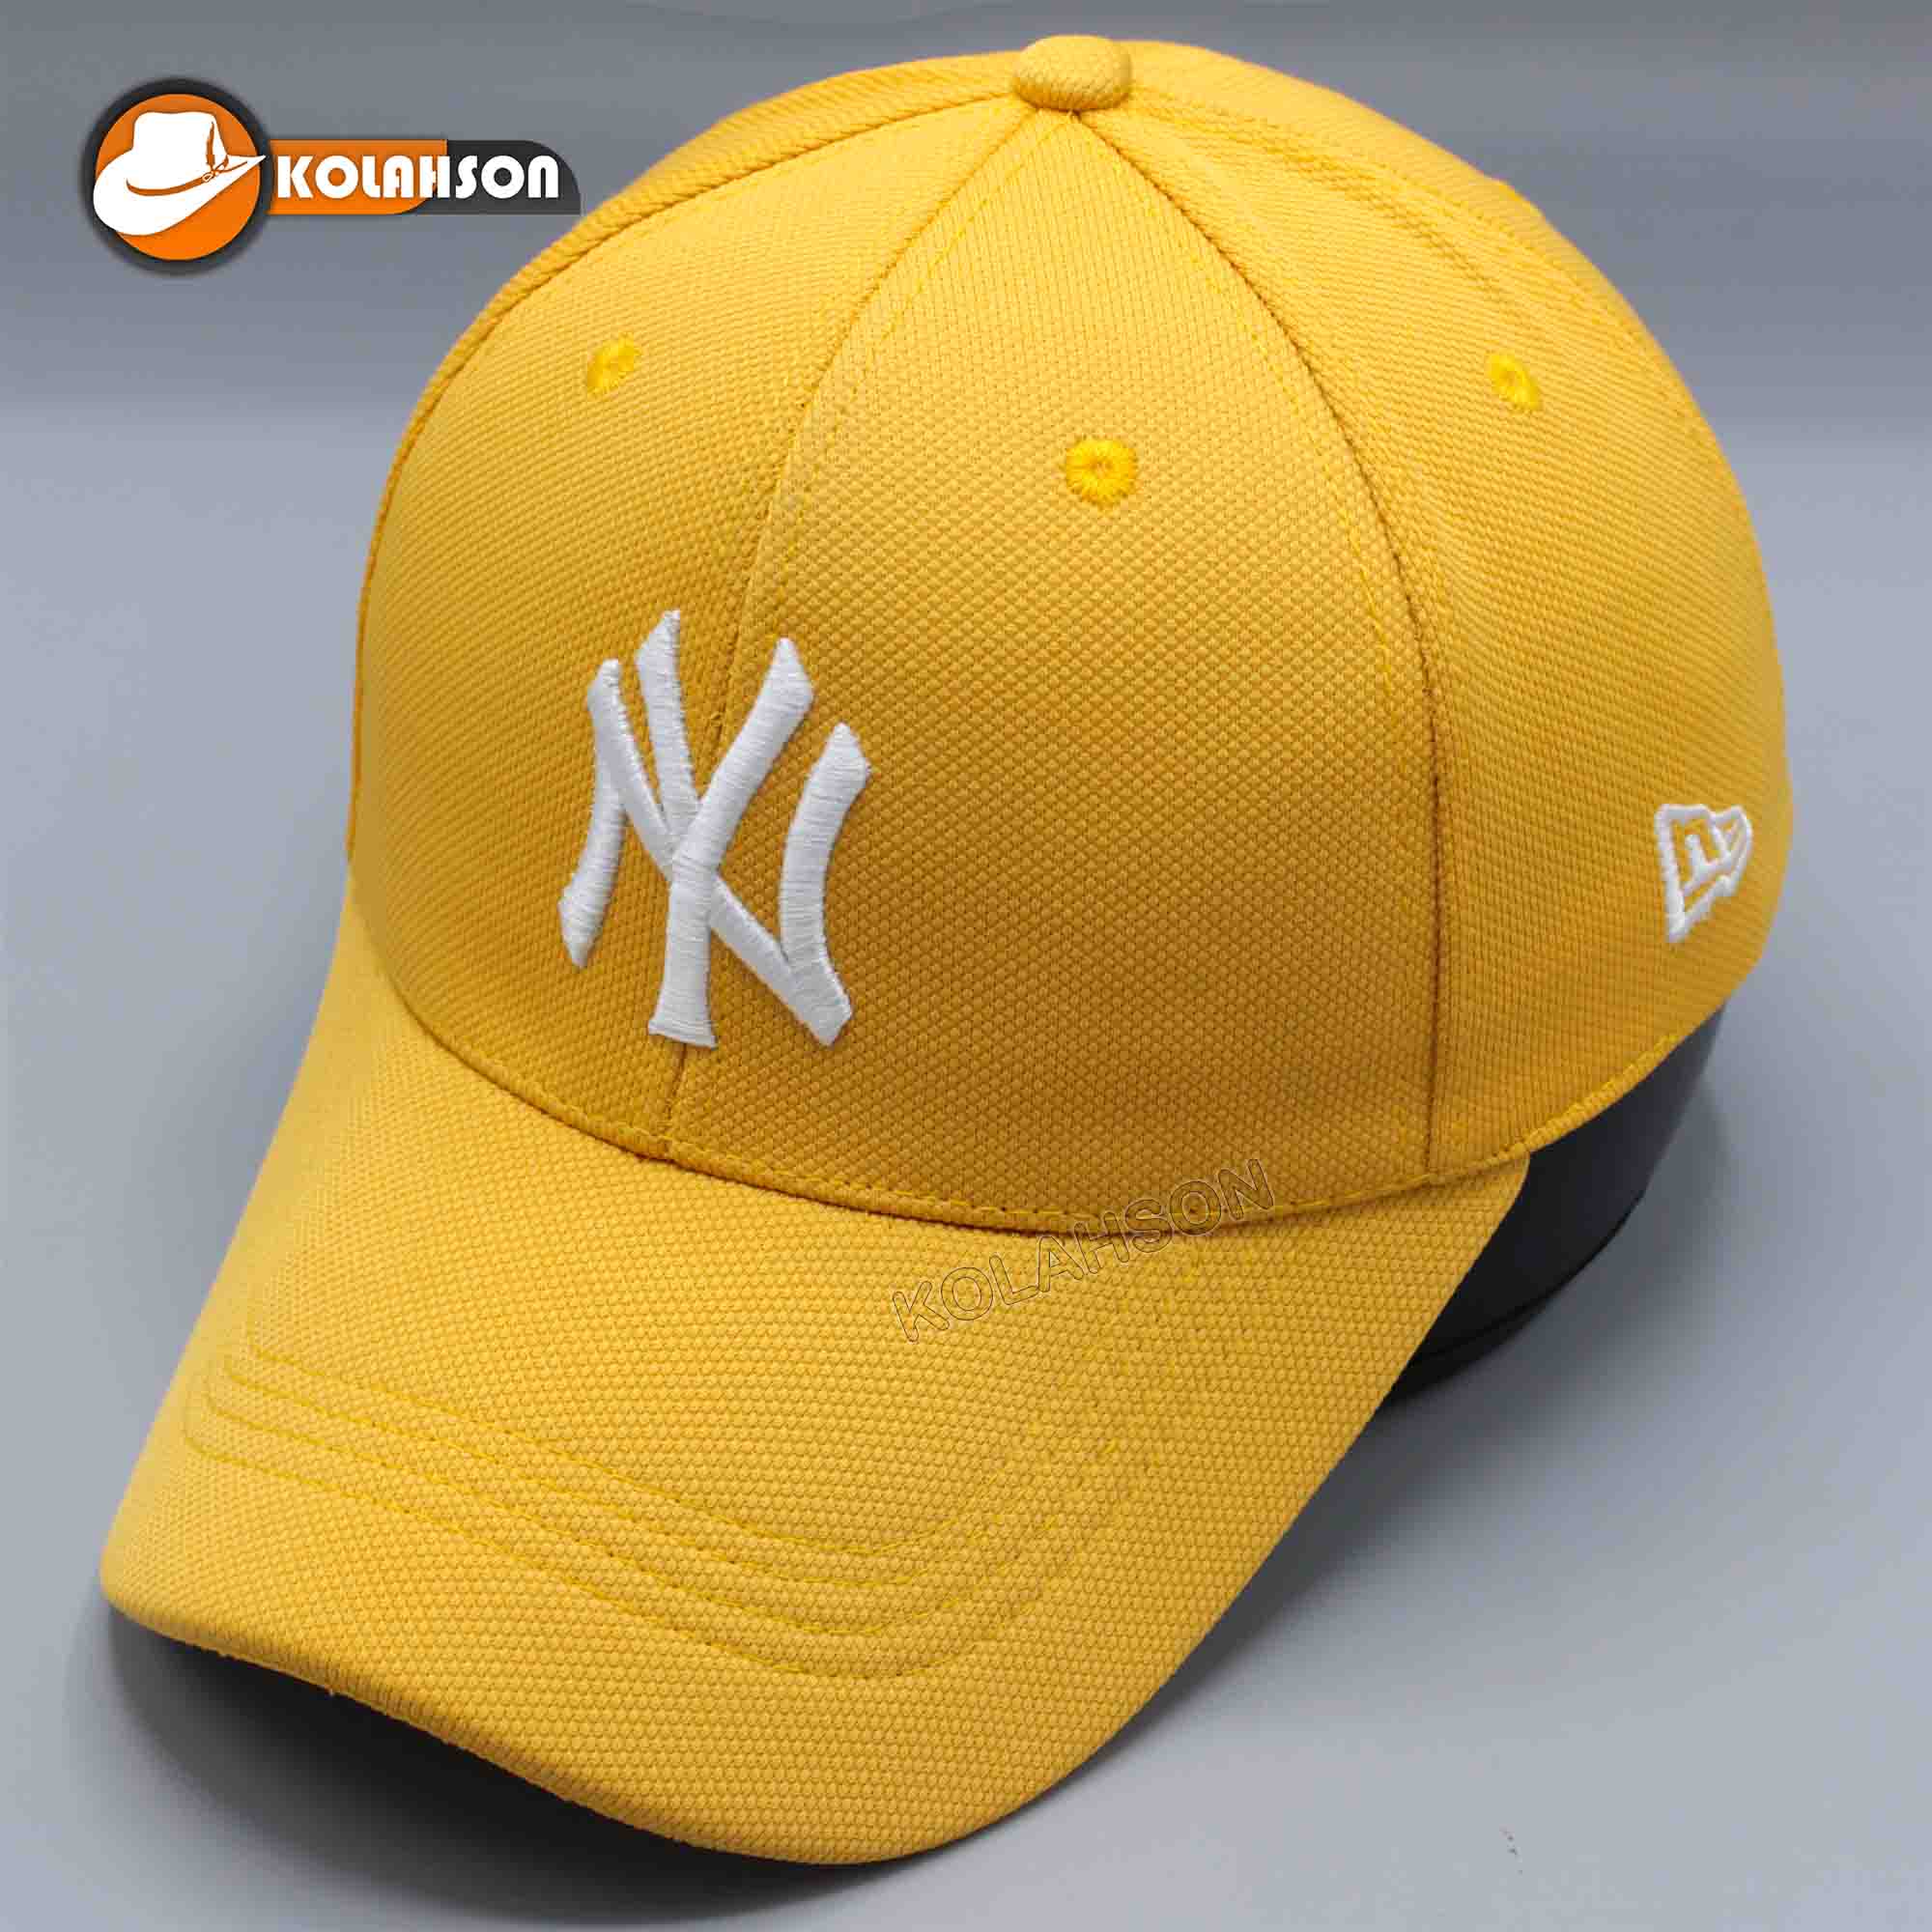 کلاه بیسبالی جودون طرح NY رنگ زرد